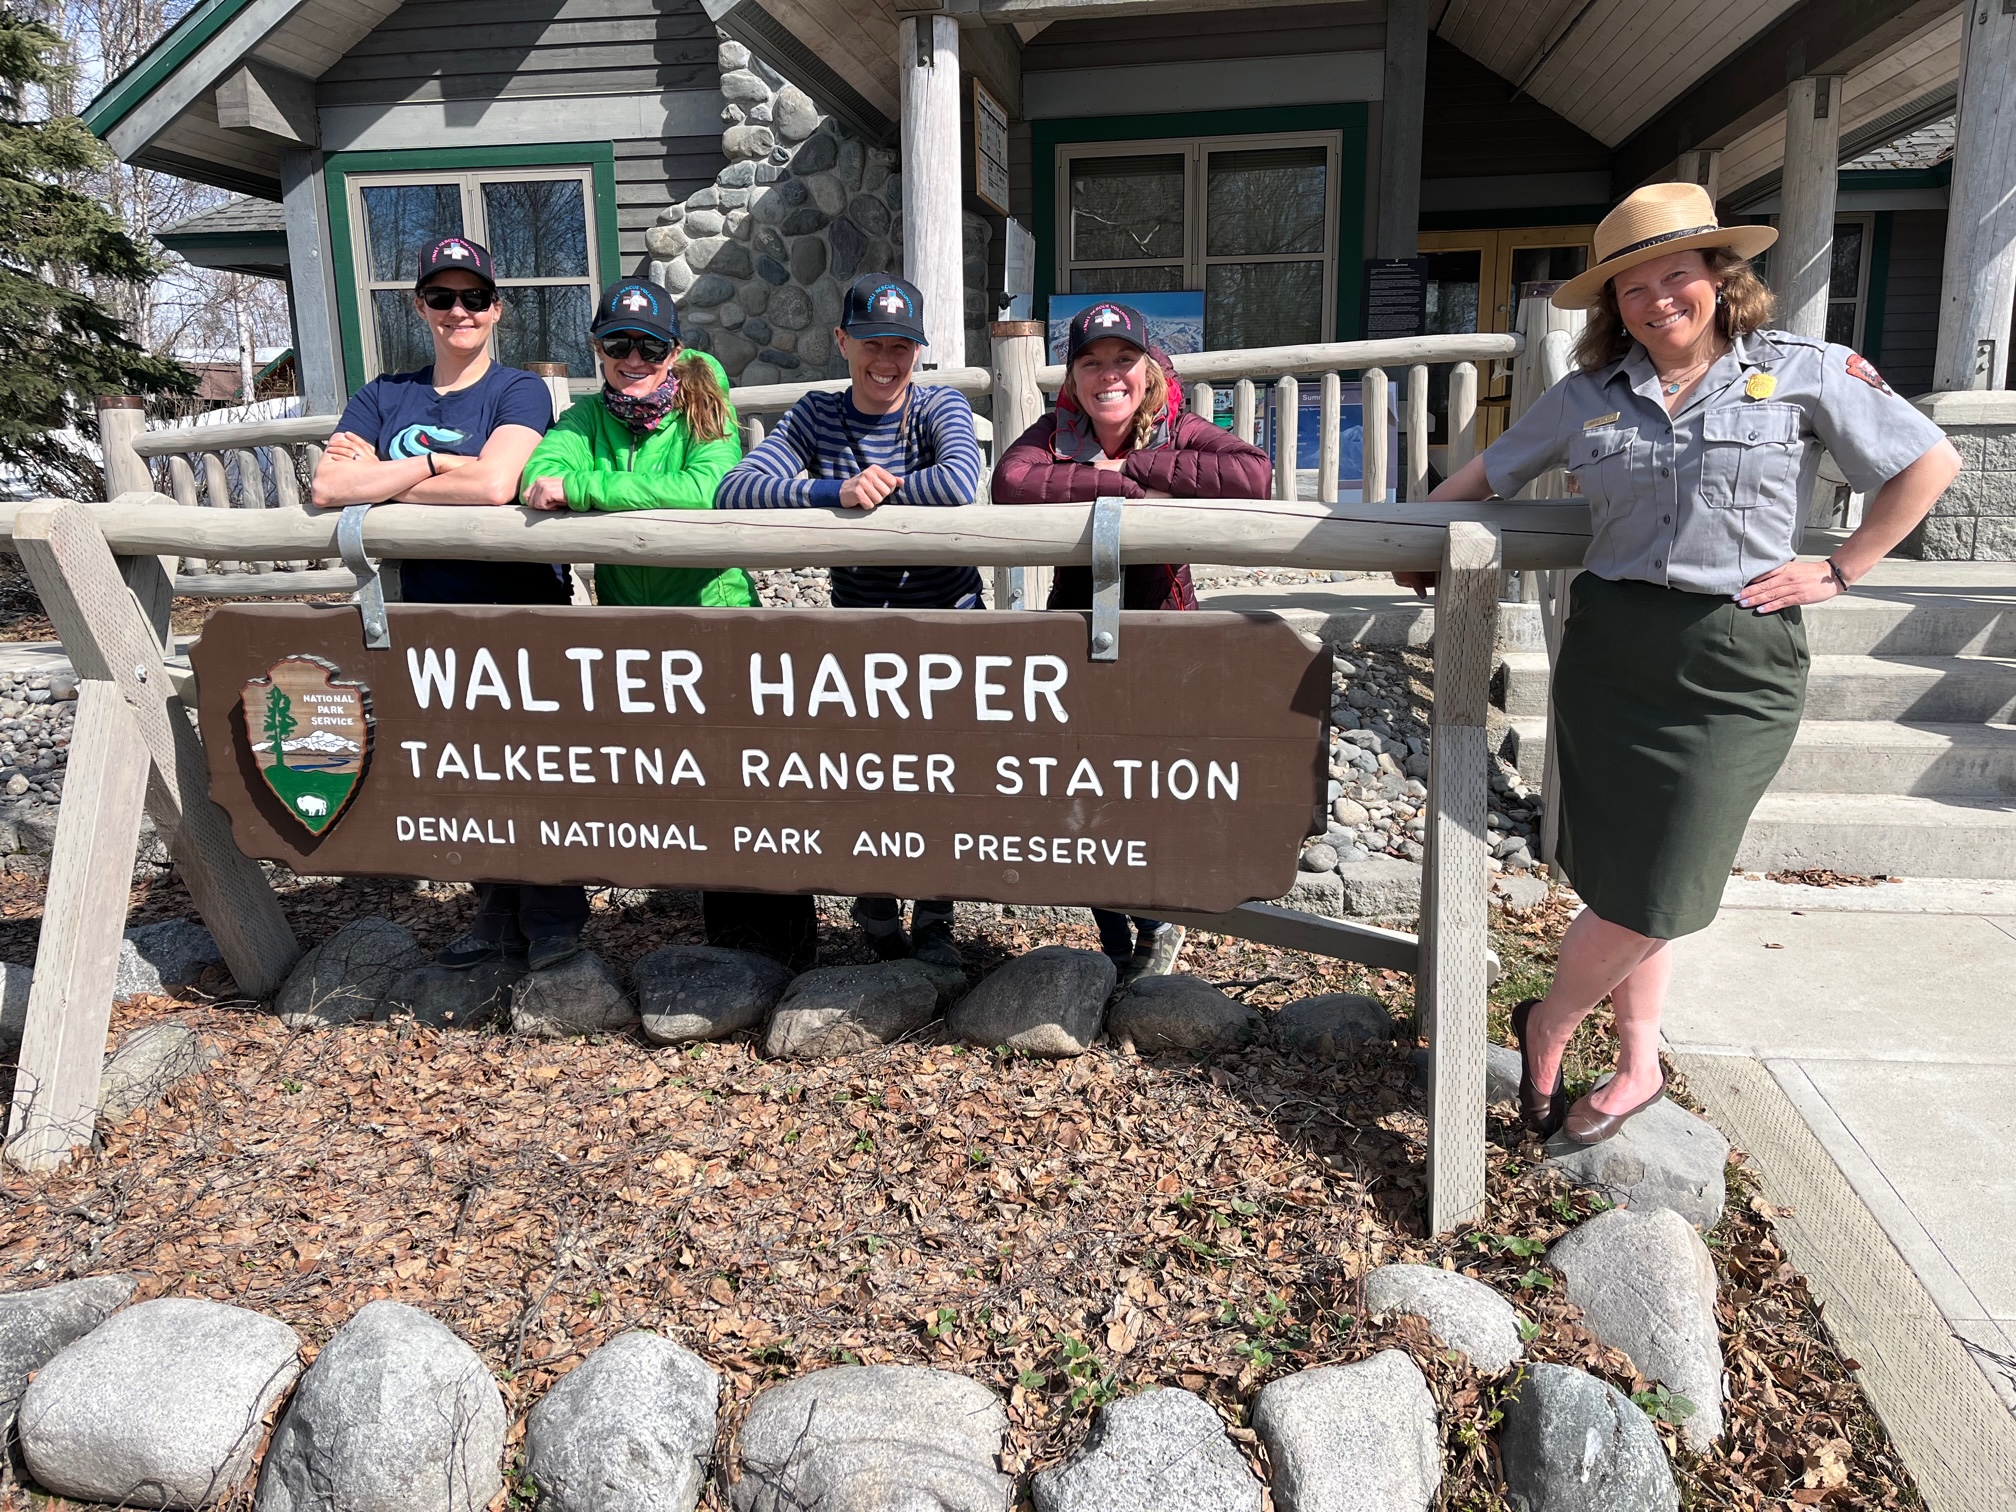 Five women stand around the Walter Harper Talkeetna Ranger Station sign